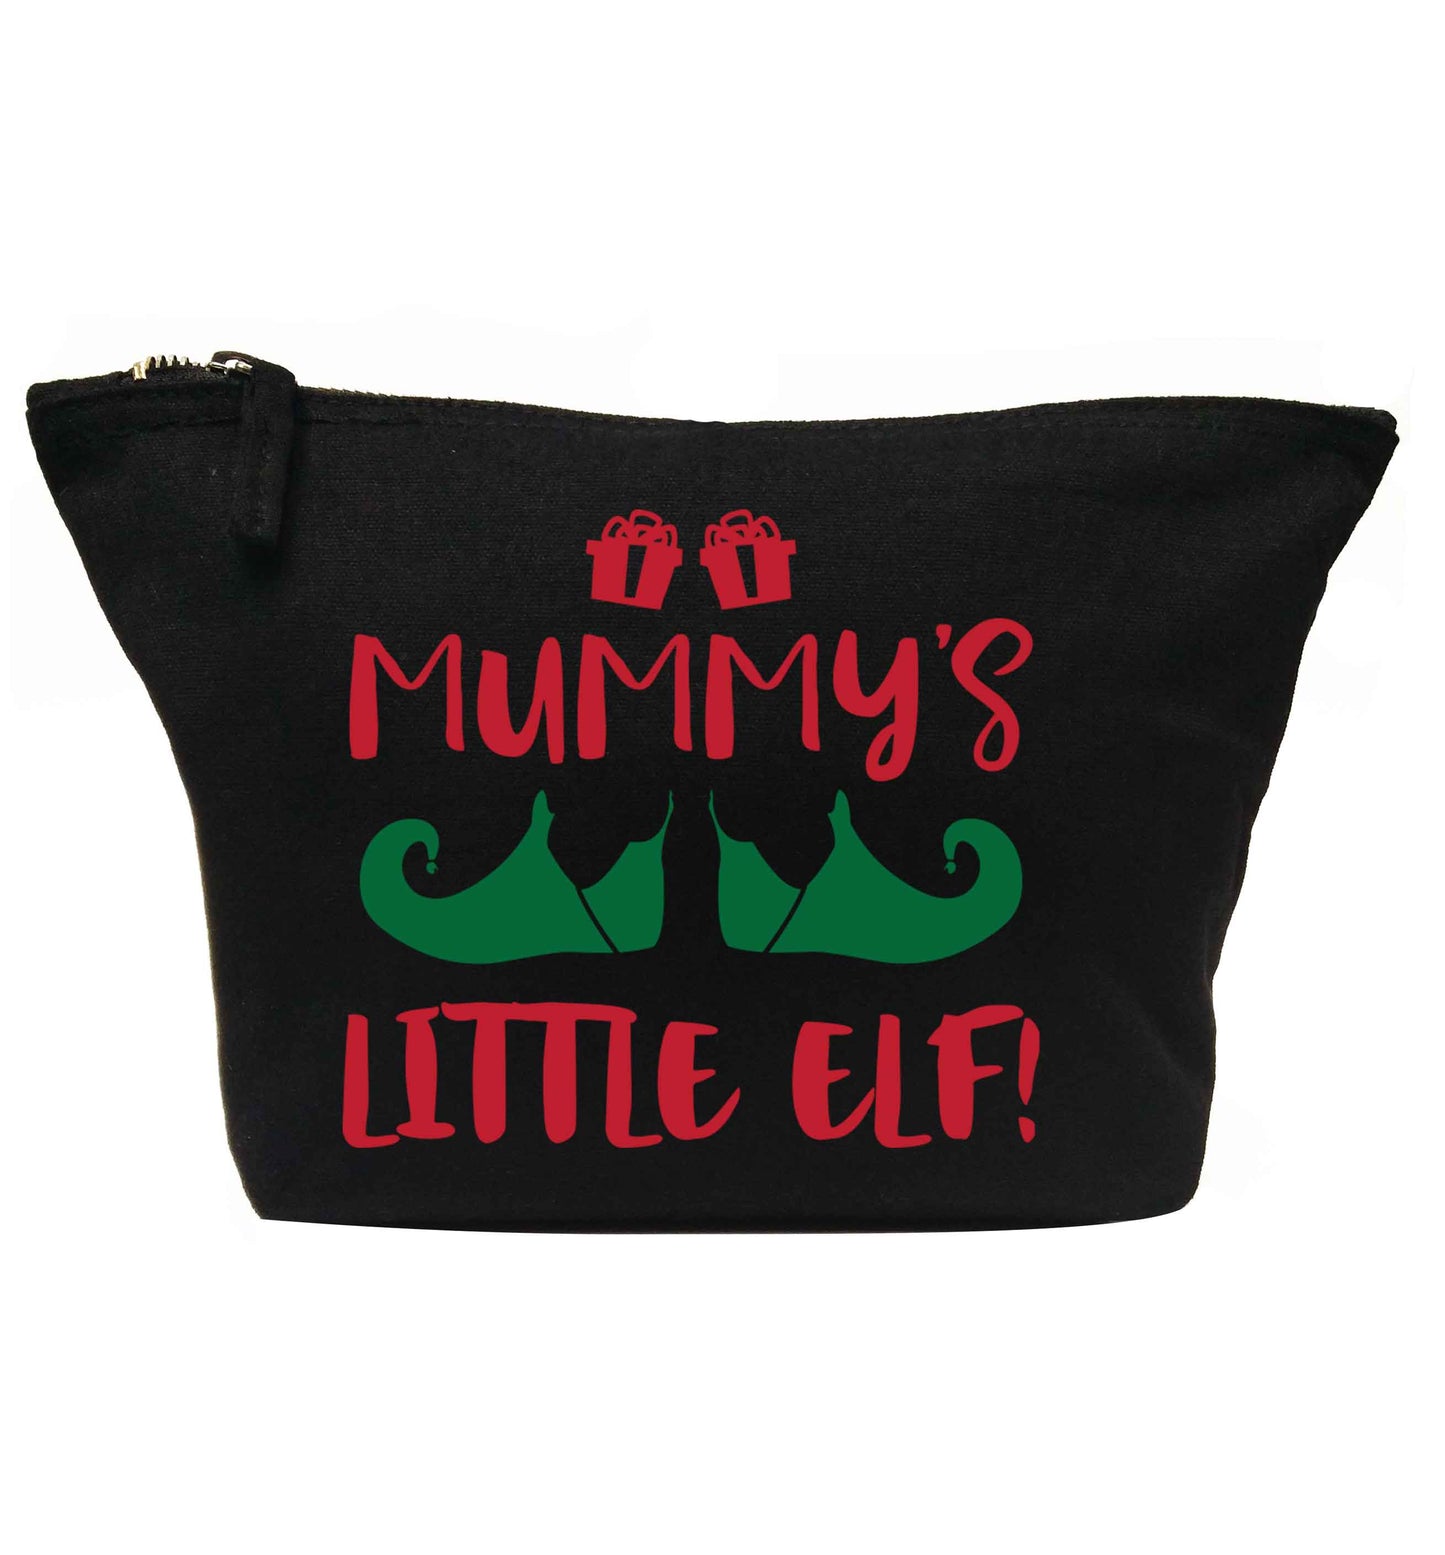 Mummy's little elf | makeup / wash bag